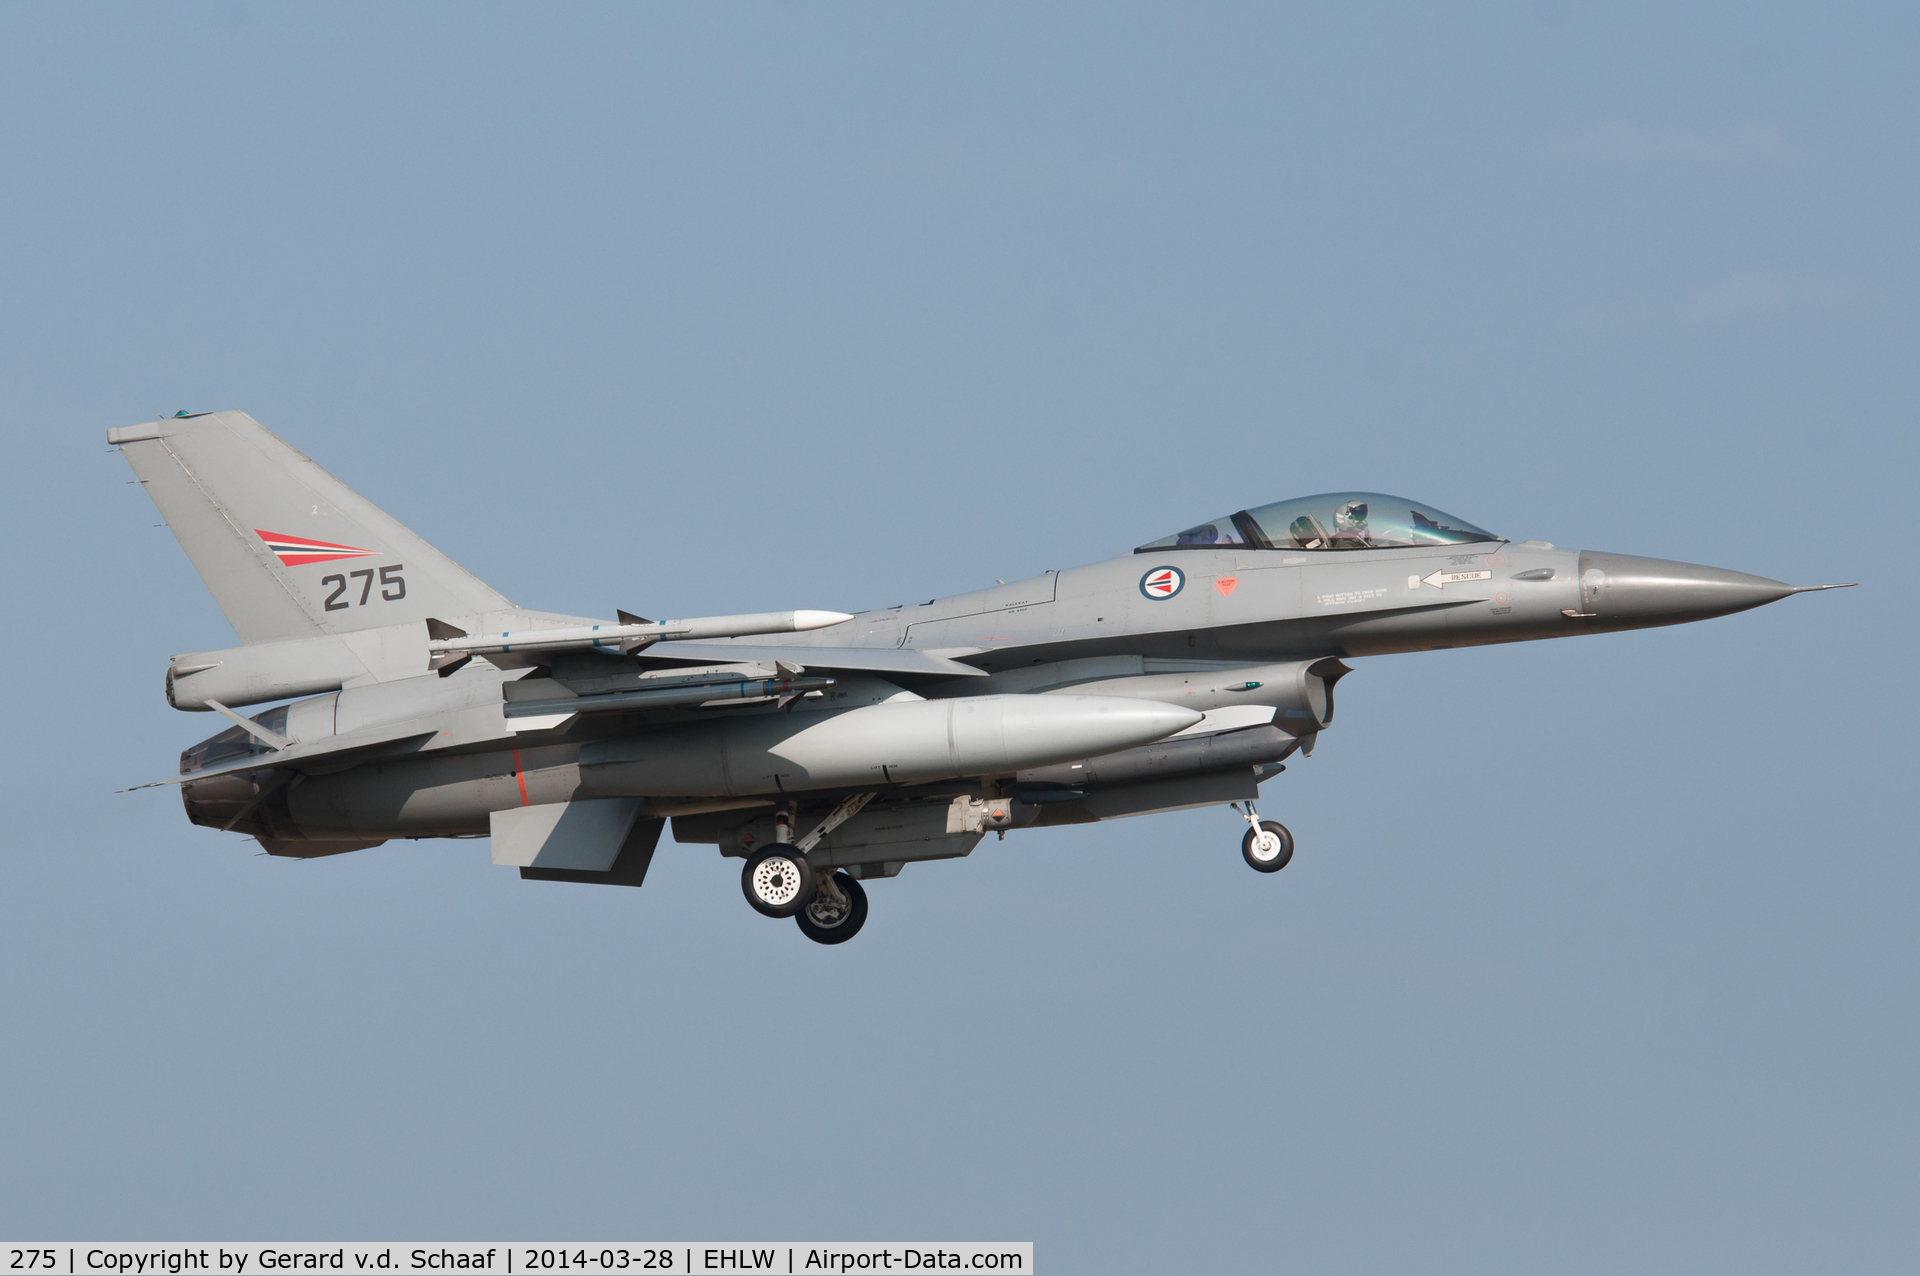 275, 1980 General Dynamics F-16A Fighting Falcon C/N 6K-4, Leeuwarden, March 2014